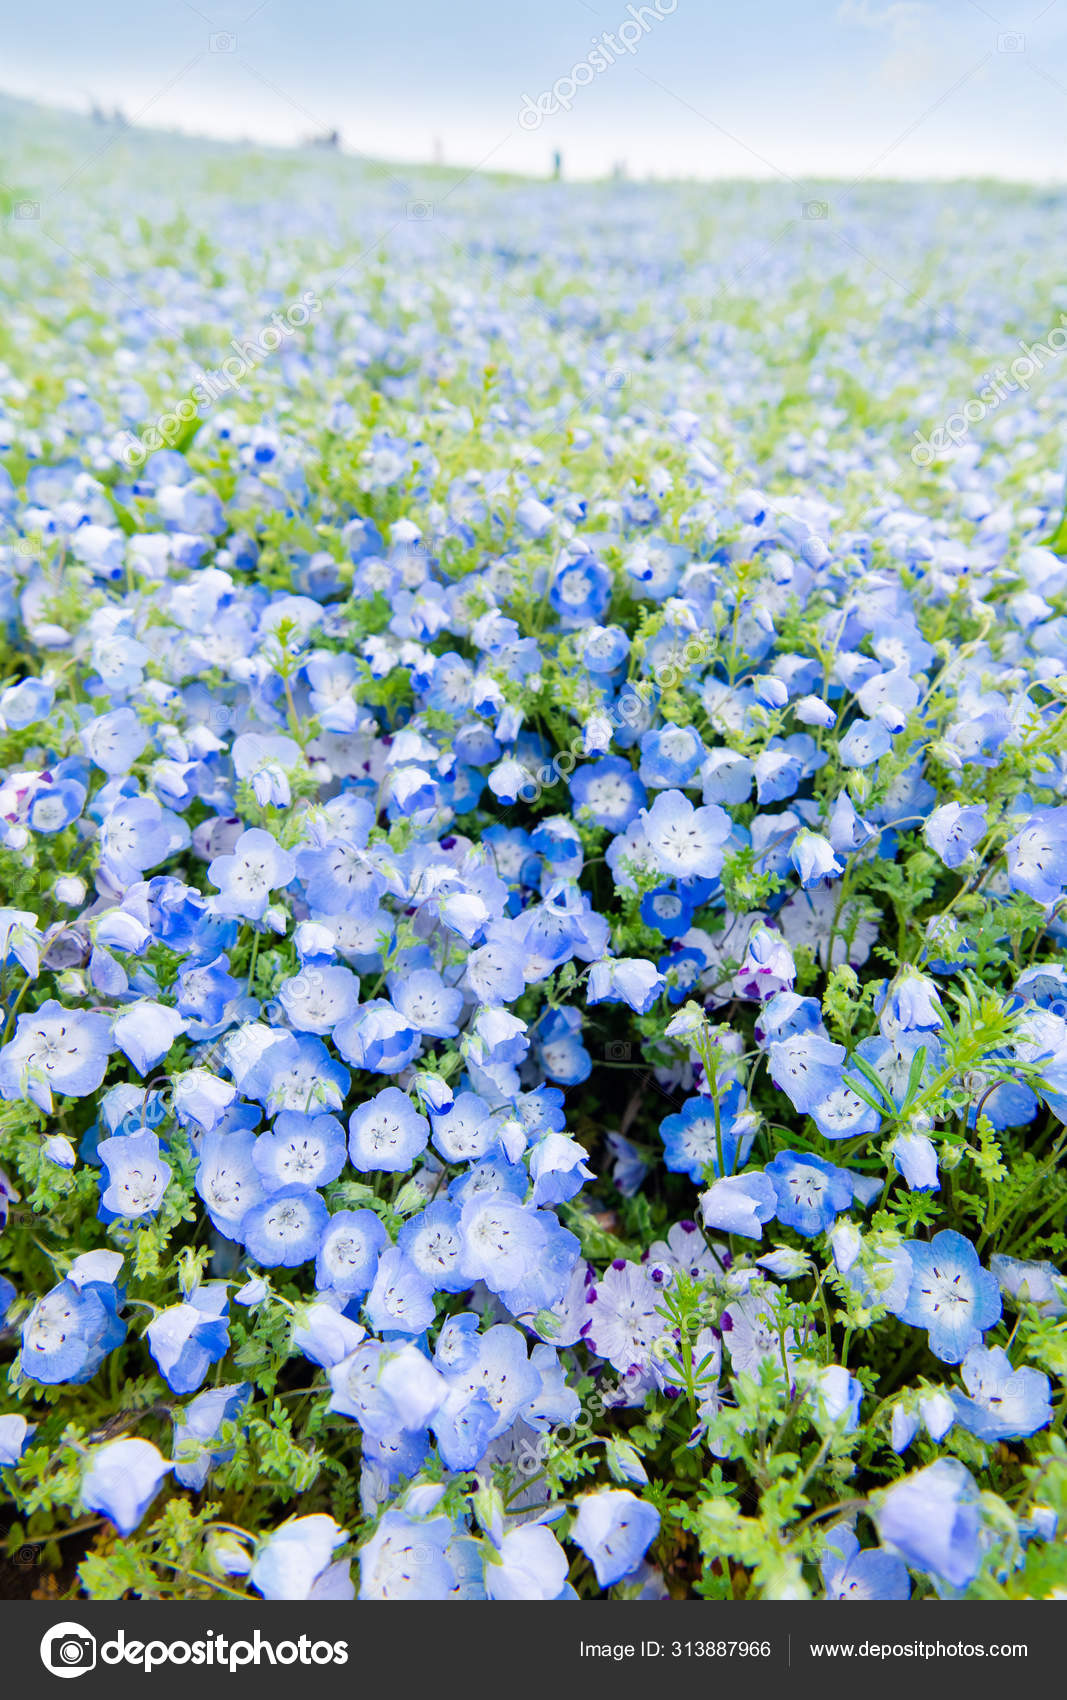 Blue Sky And Nemophila Menziesii Baby Blue Eyes Flower Stock Photo C Pmu Umq